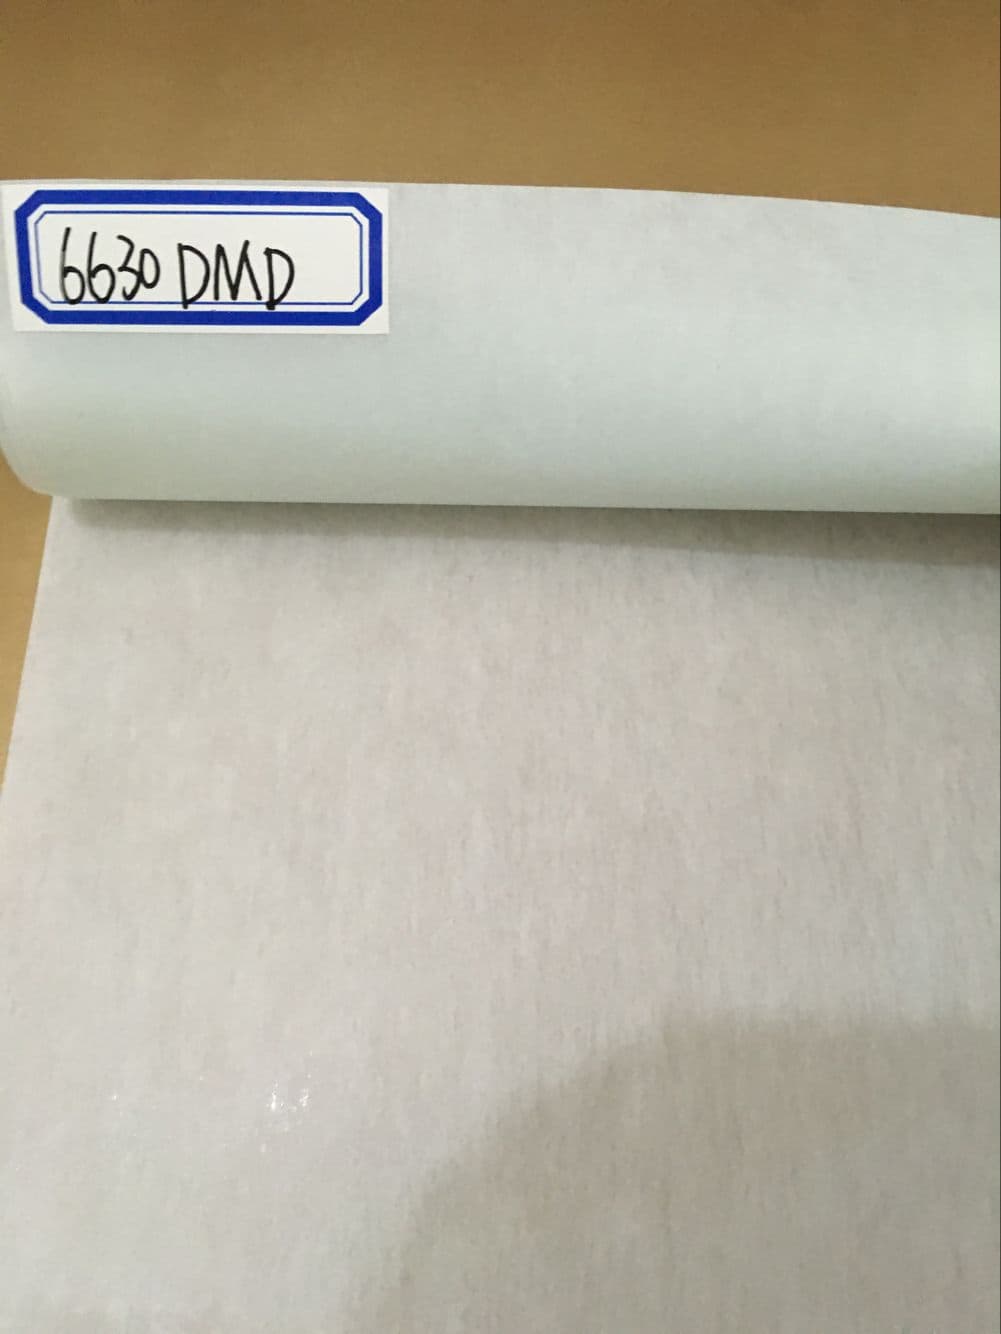 B_class 6630DMD Flexible laminates paper for motor